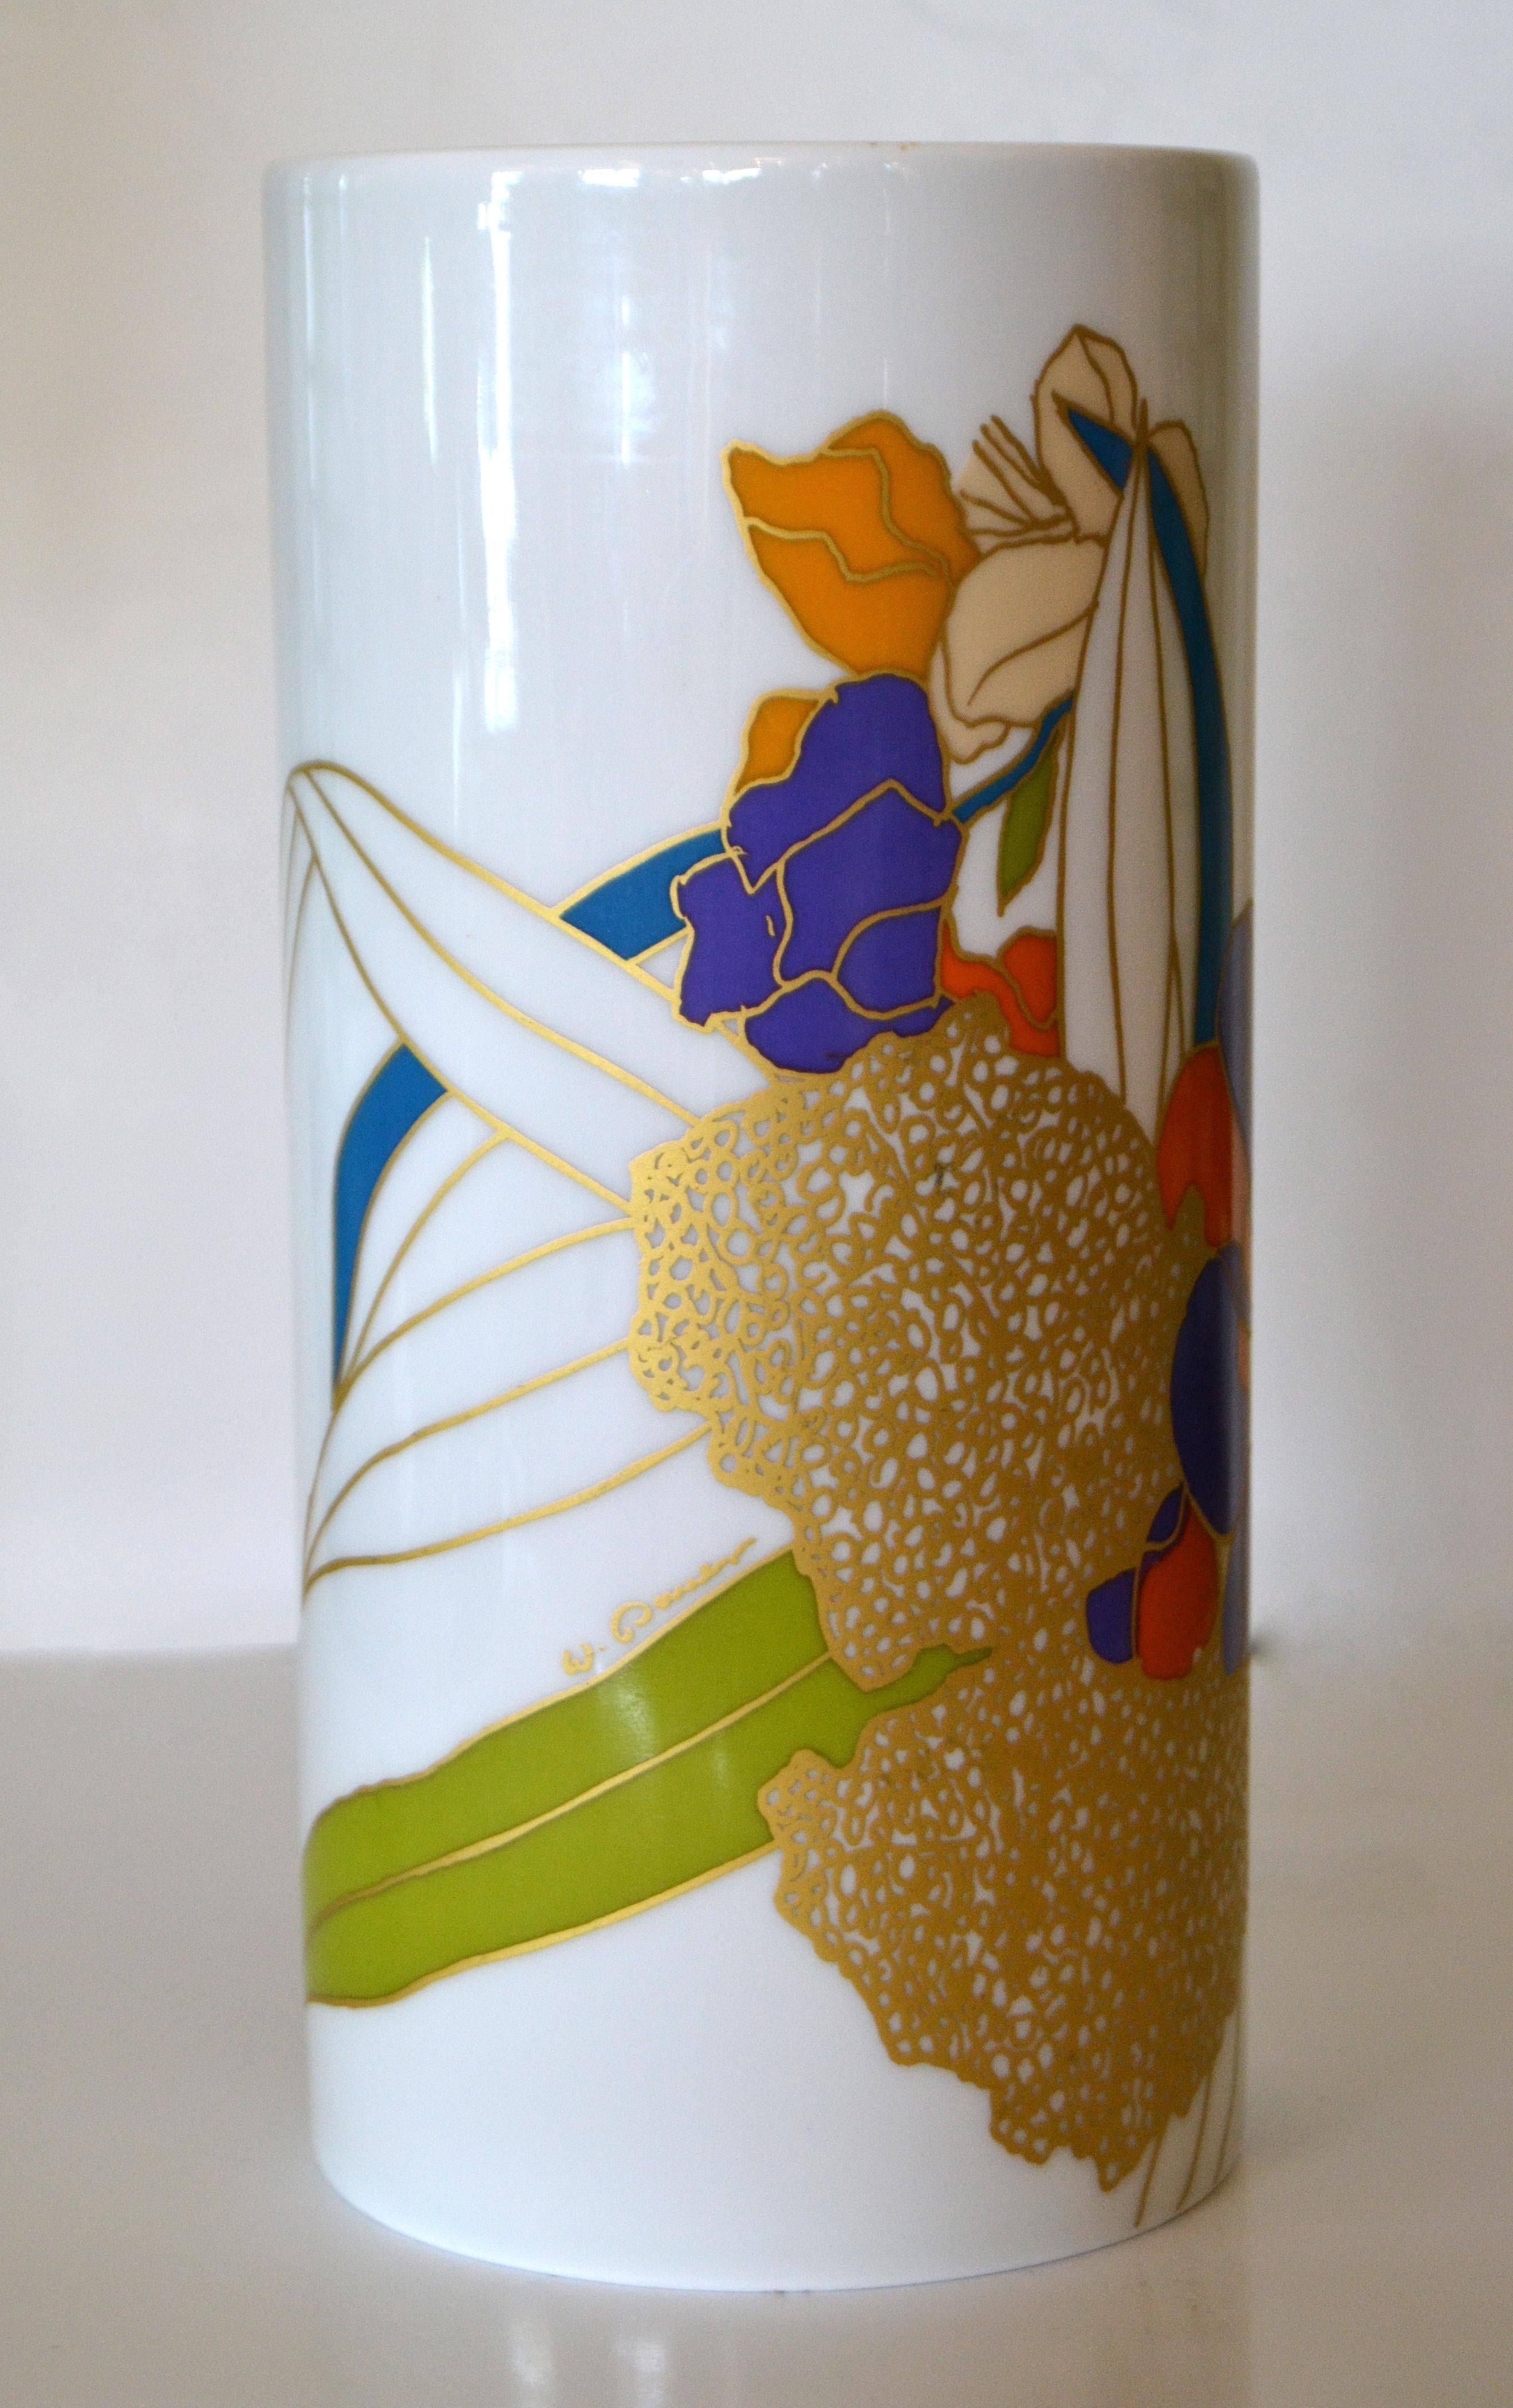 Mid-20th Century Original Rosenthal Porcelain Flower Vase Studio-Linie Germany by Wolfgang Bauer